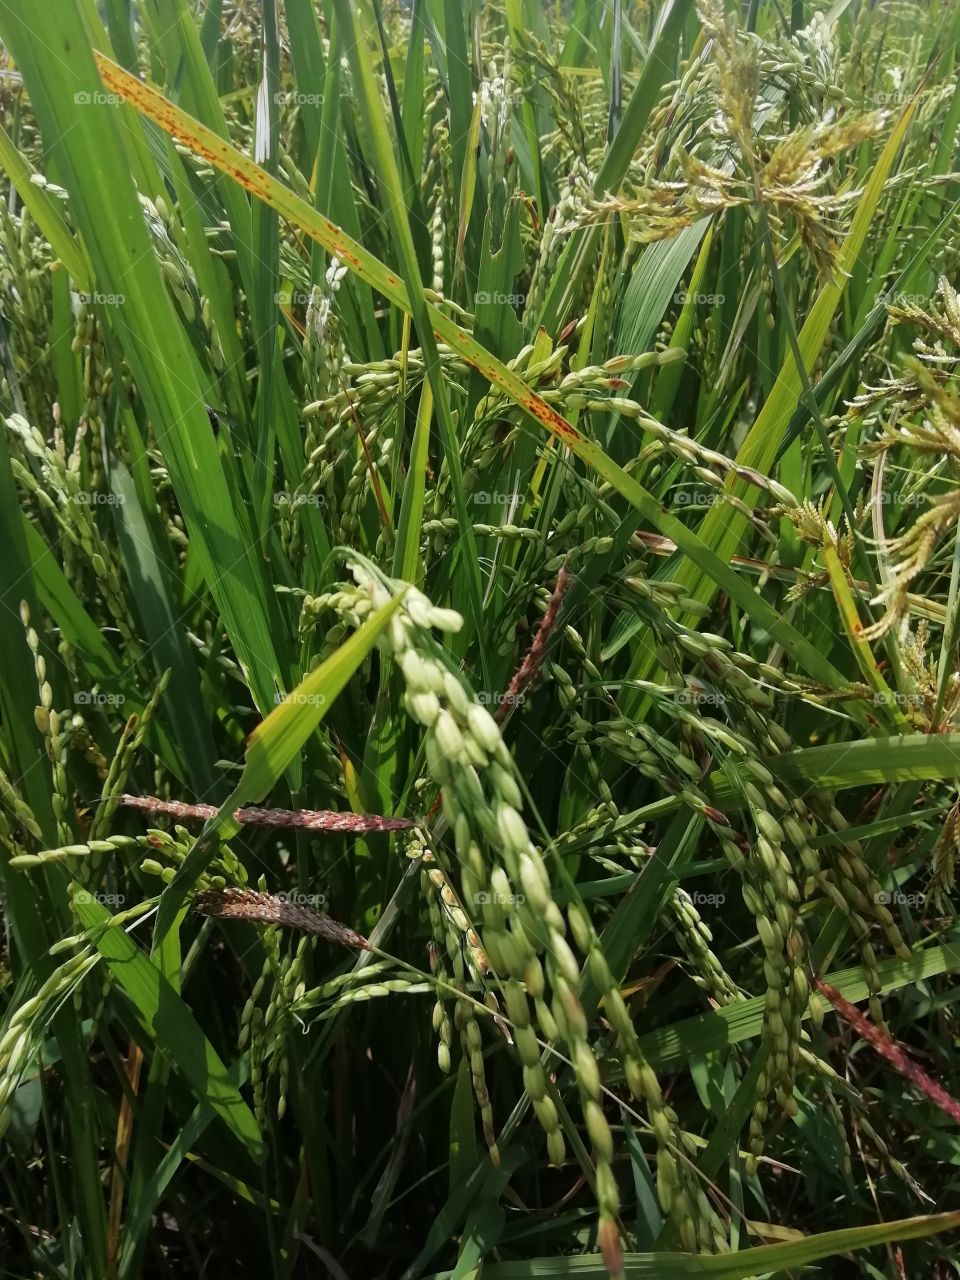 Rice plants # seeds